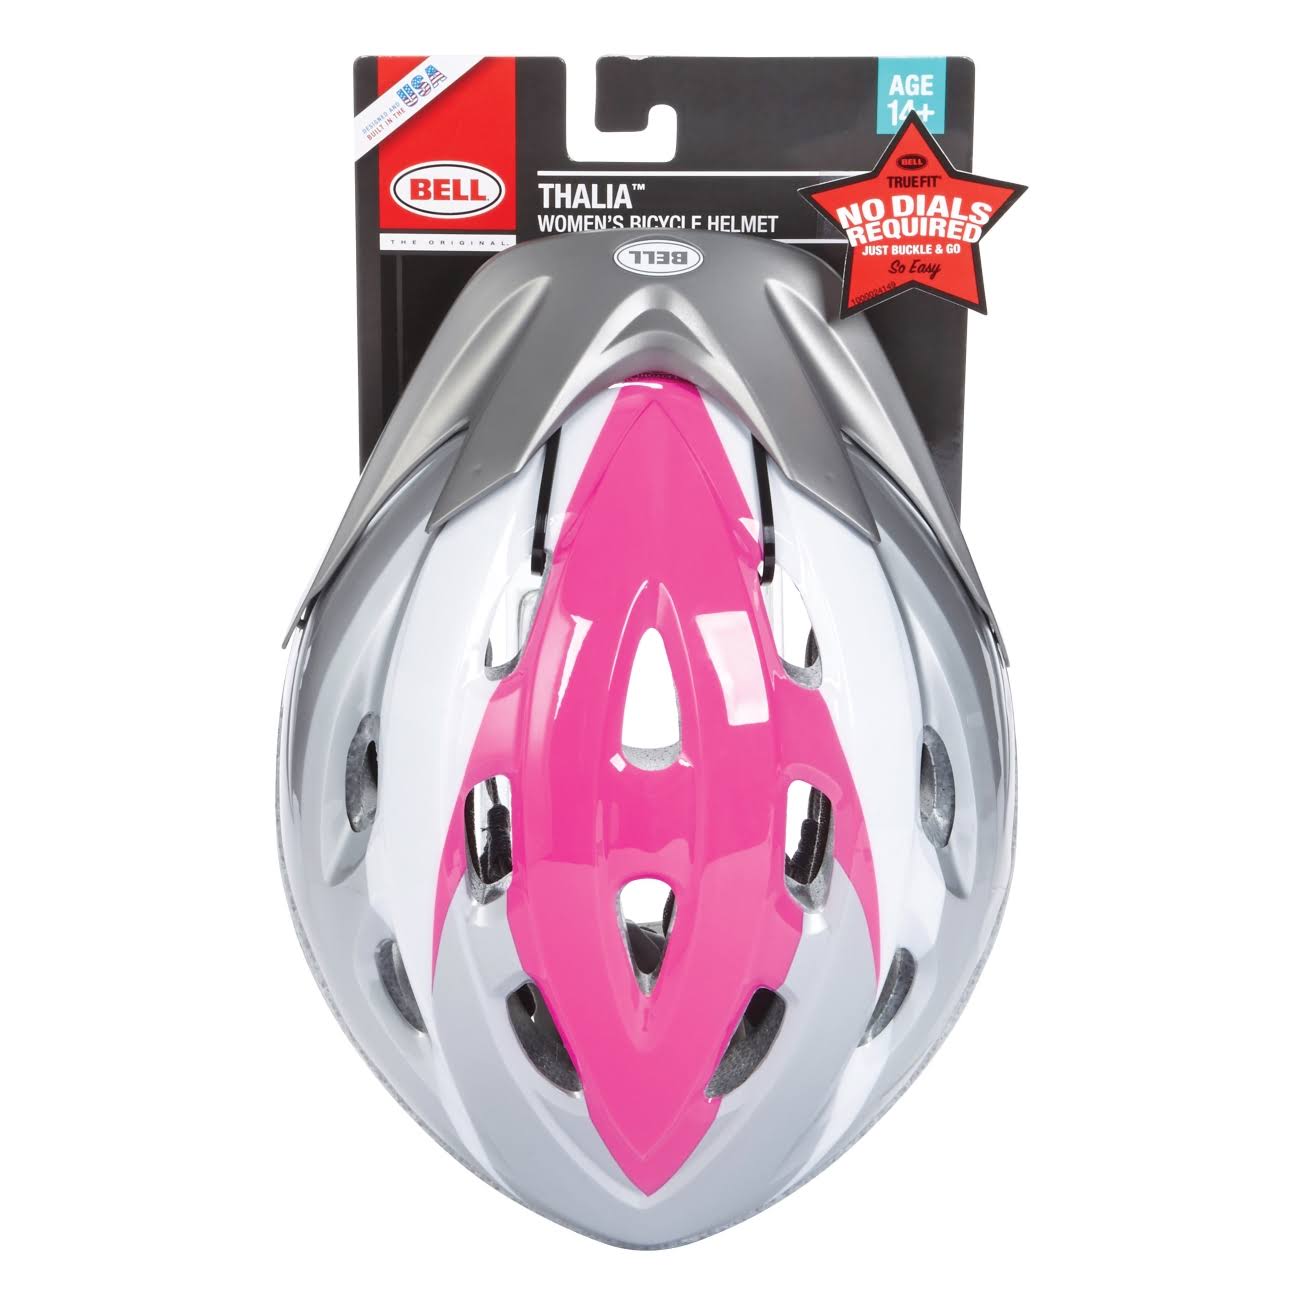 Bell Women's Thalia Bike Helmet - Pink/Silver/White